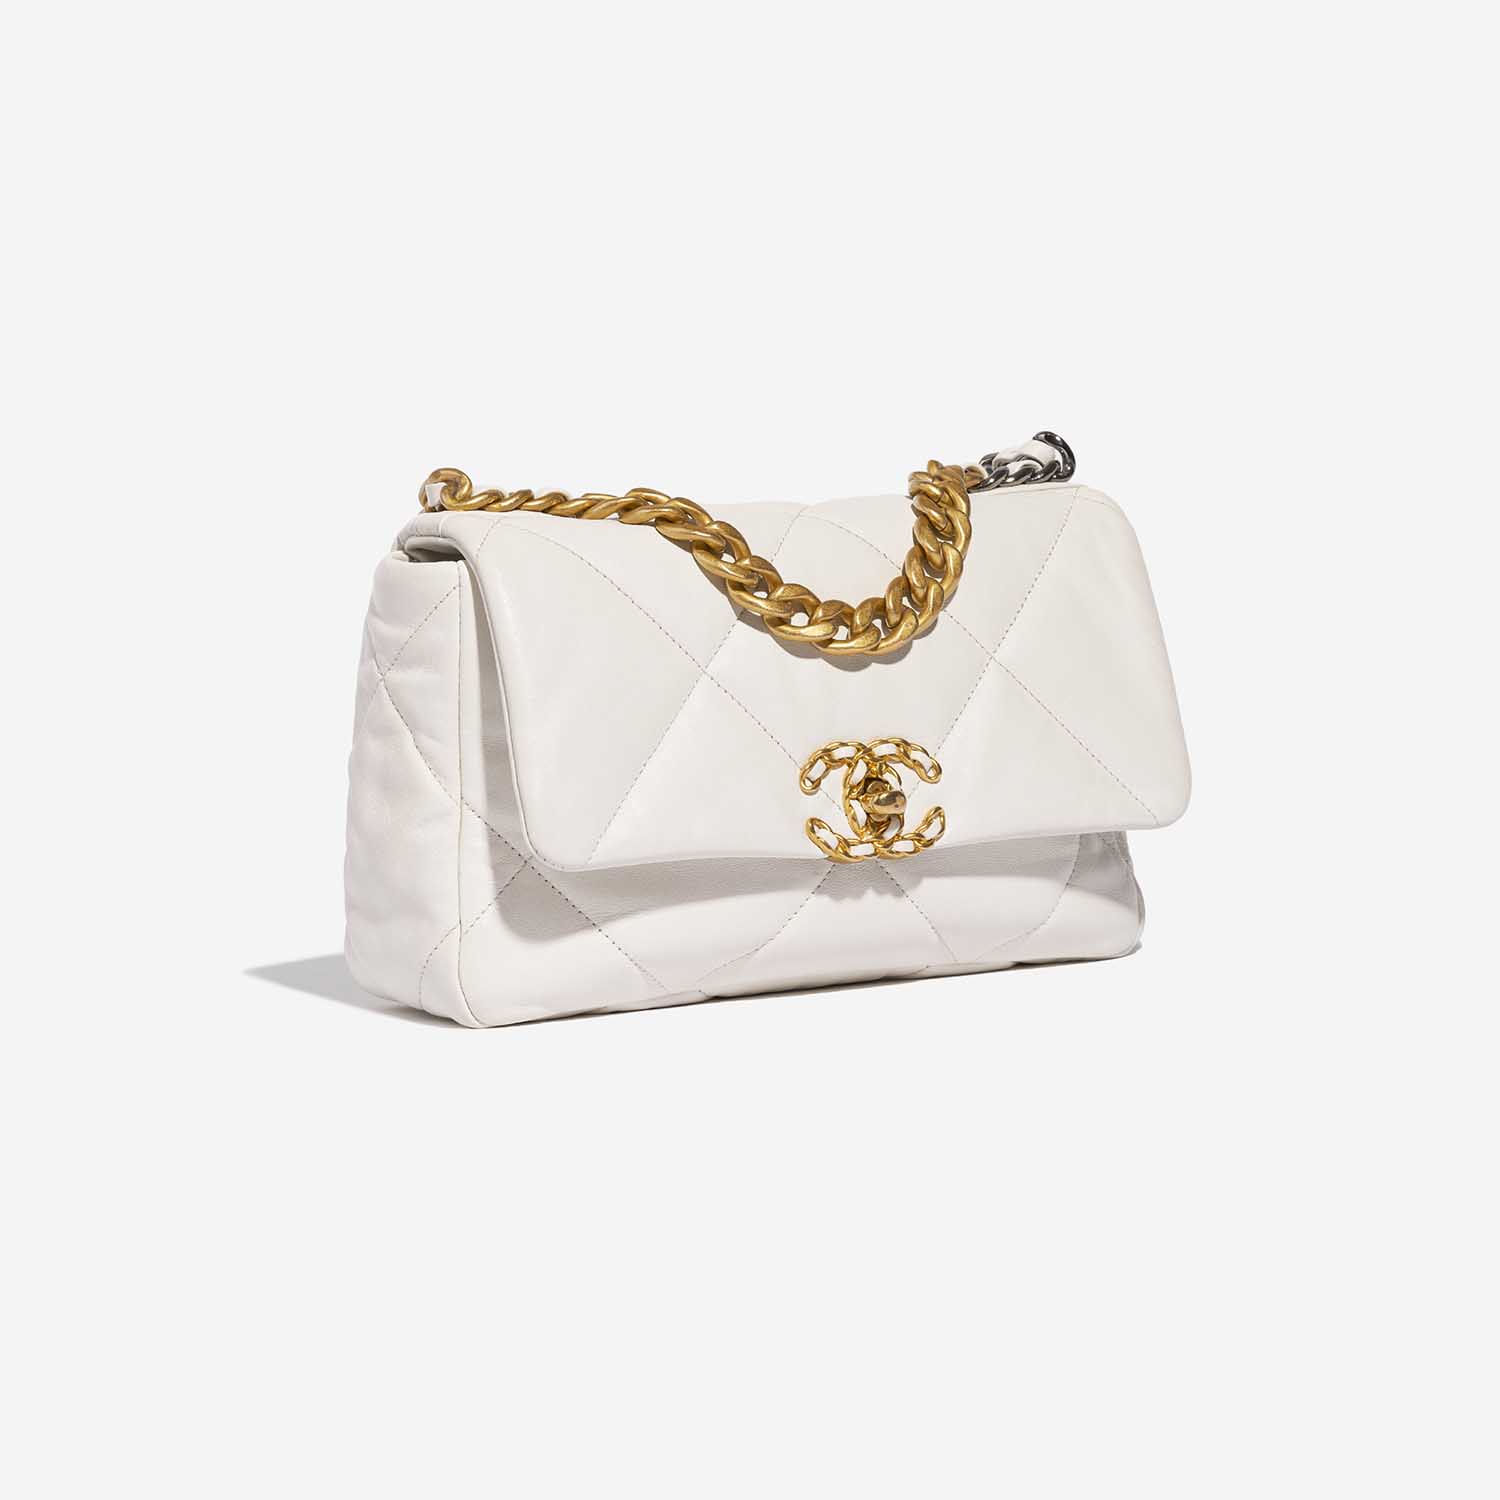 Chanel 19 FlapBag Cream Side Front  | Sell your designer bag on Saclab.com